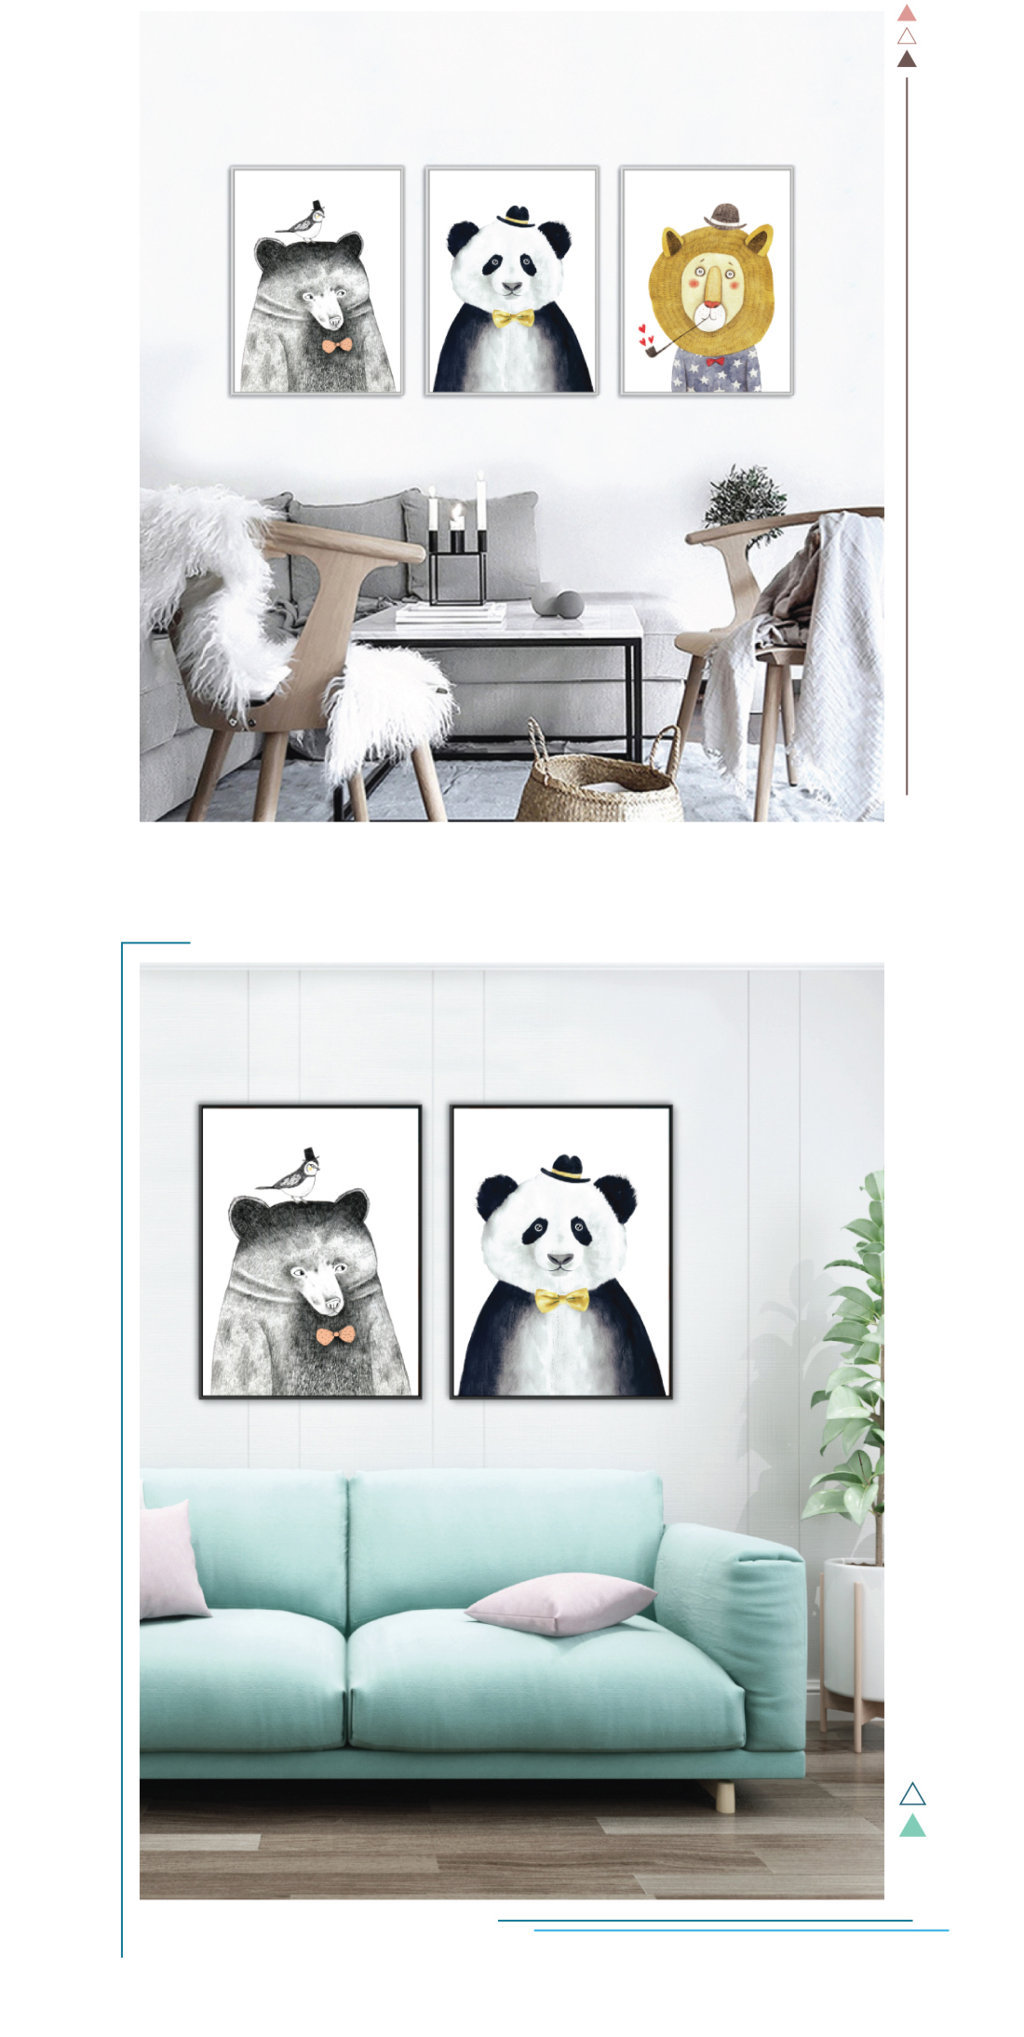 Mr Panda - Multi Present